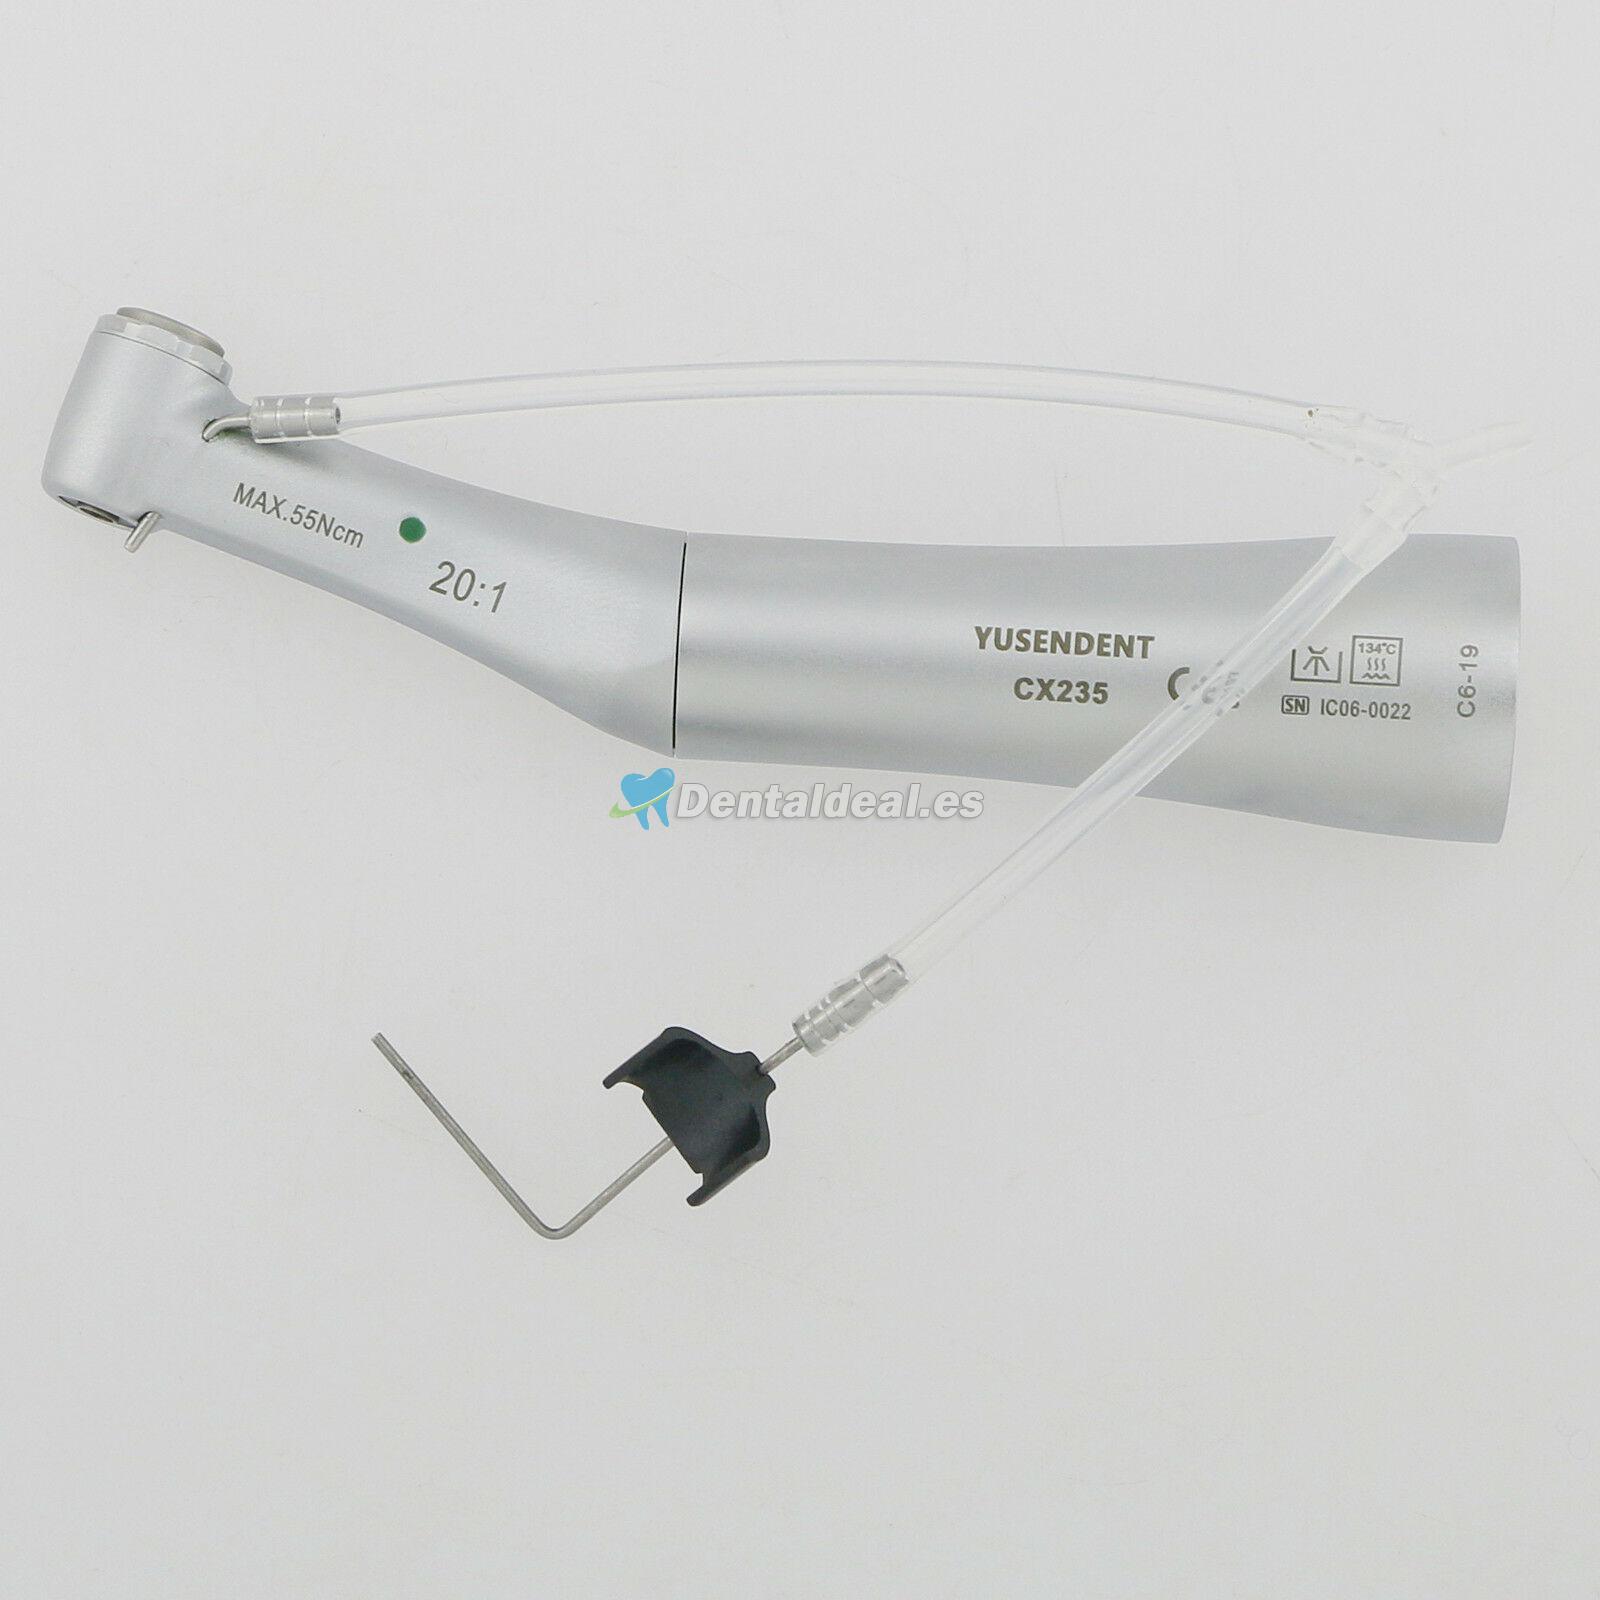 YUSENDENT COXO CX235 C6-19 Contra-ángulo 20:1 implantes Botón Pieza de Mano Dental